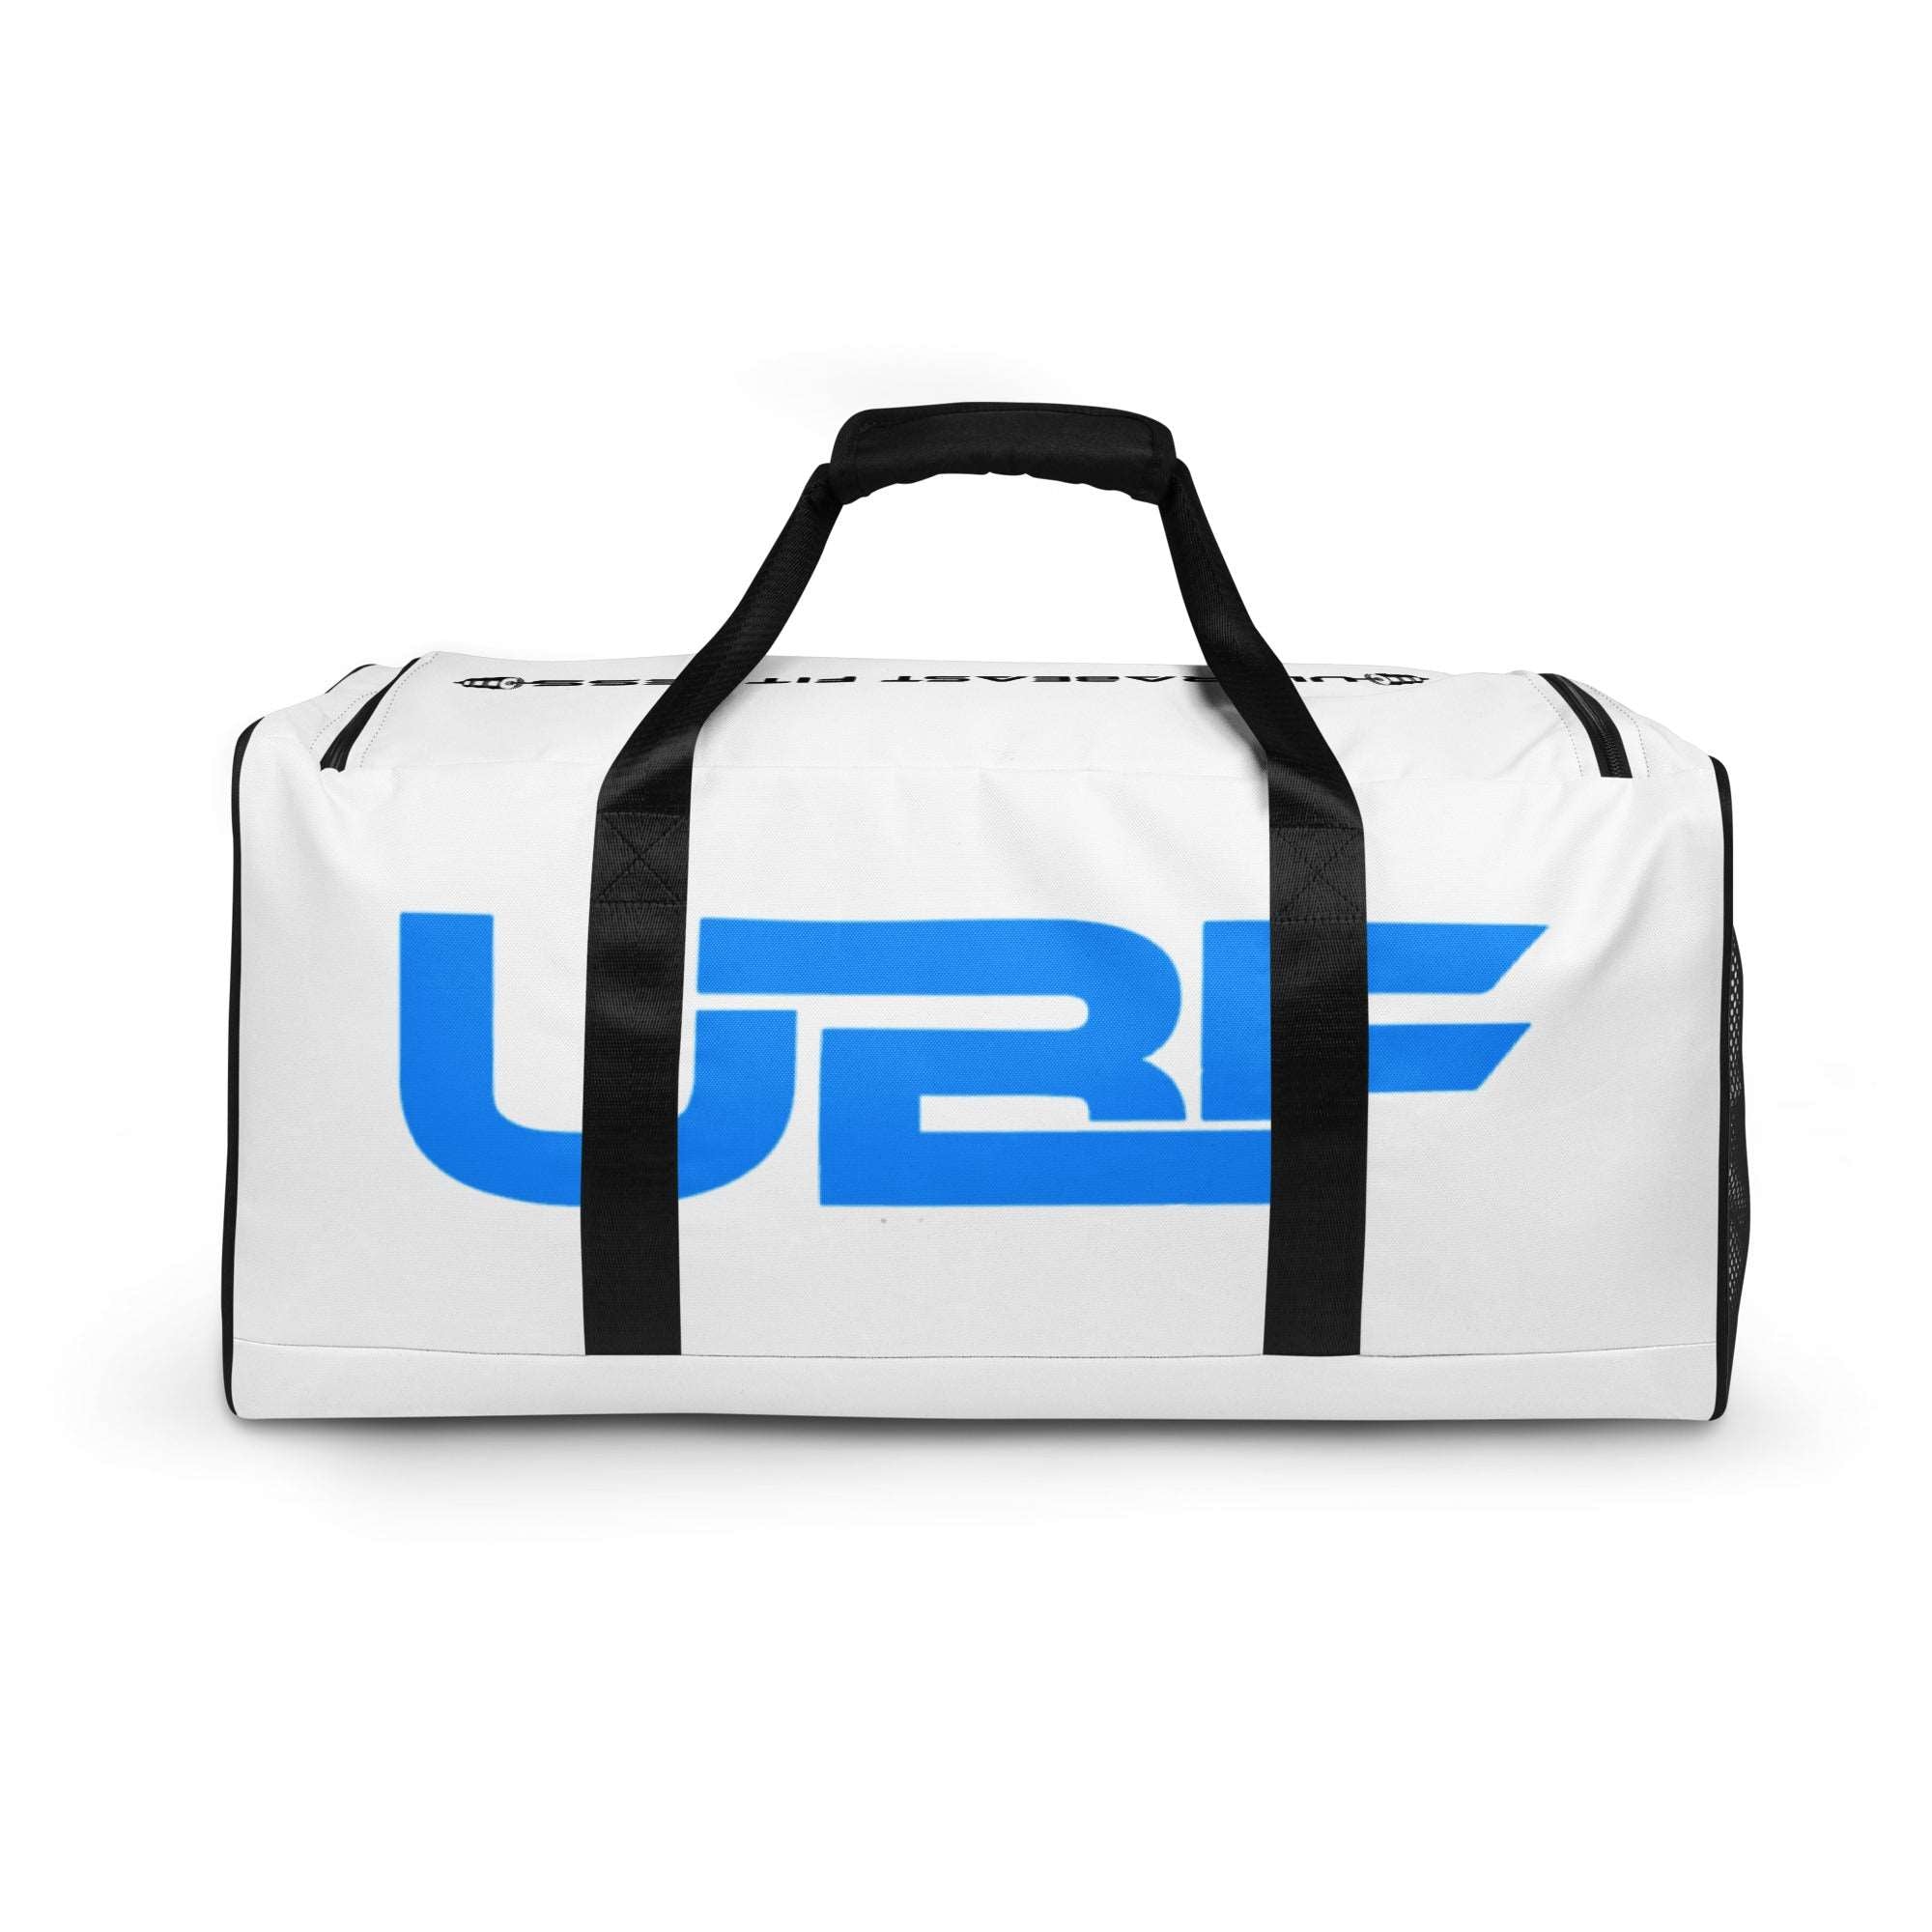 Blue and White UBF Duffle bag